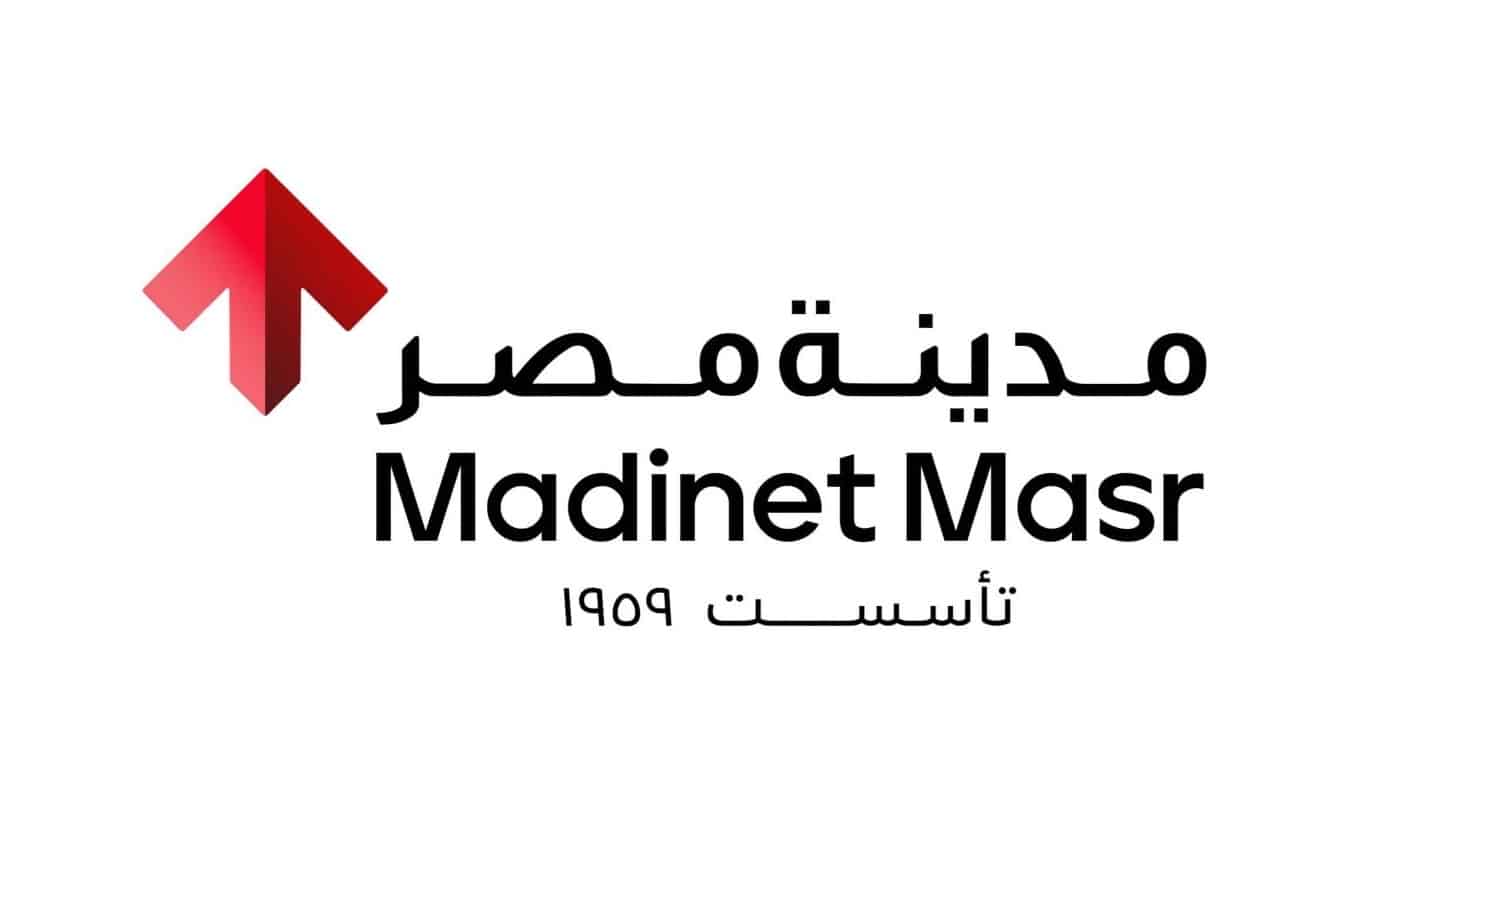 Madinet Masr wins EGX Excellence Award for Largest Trading Volume